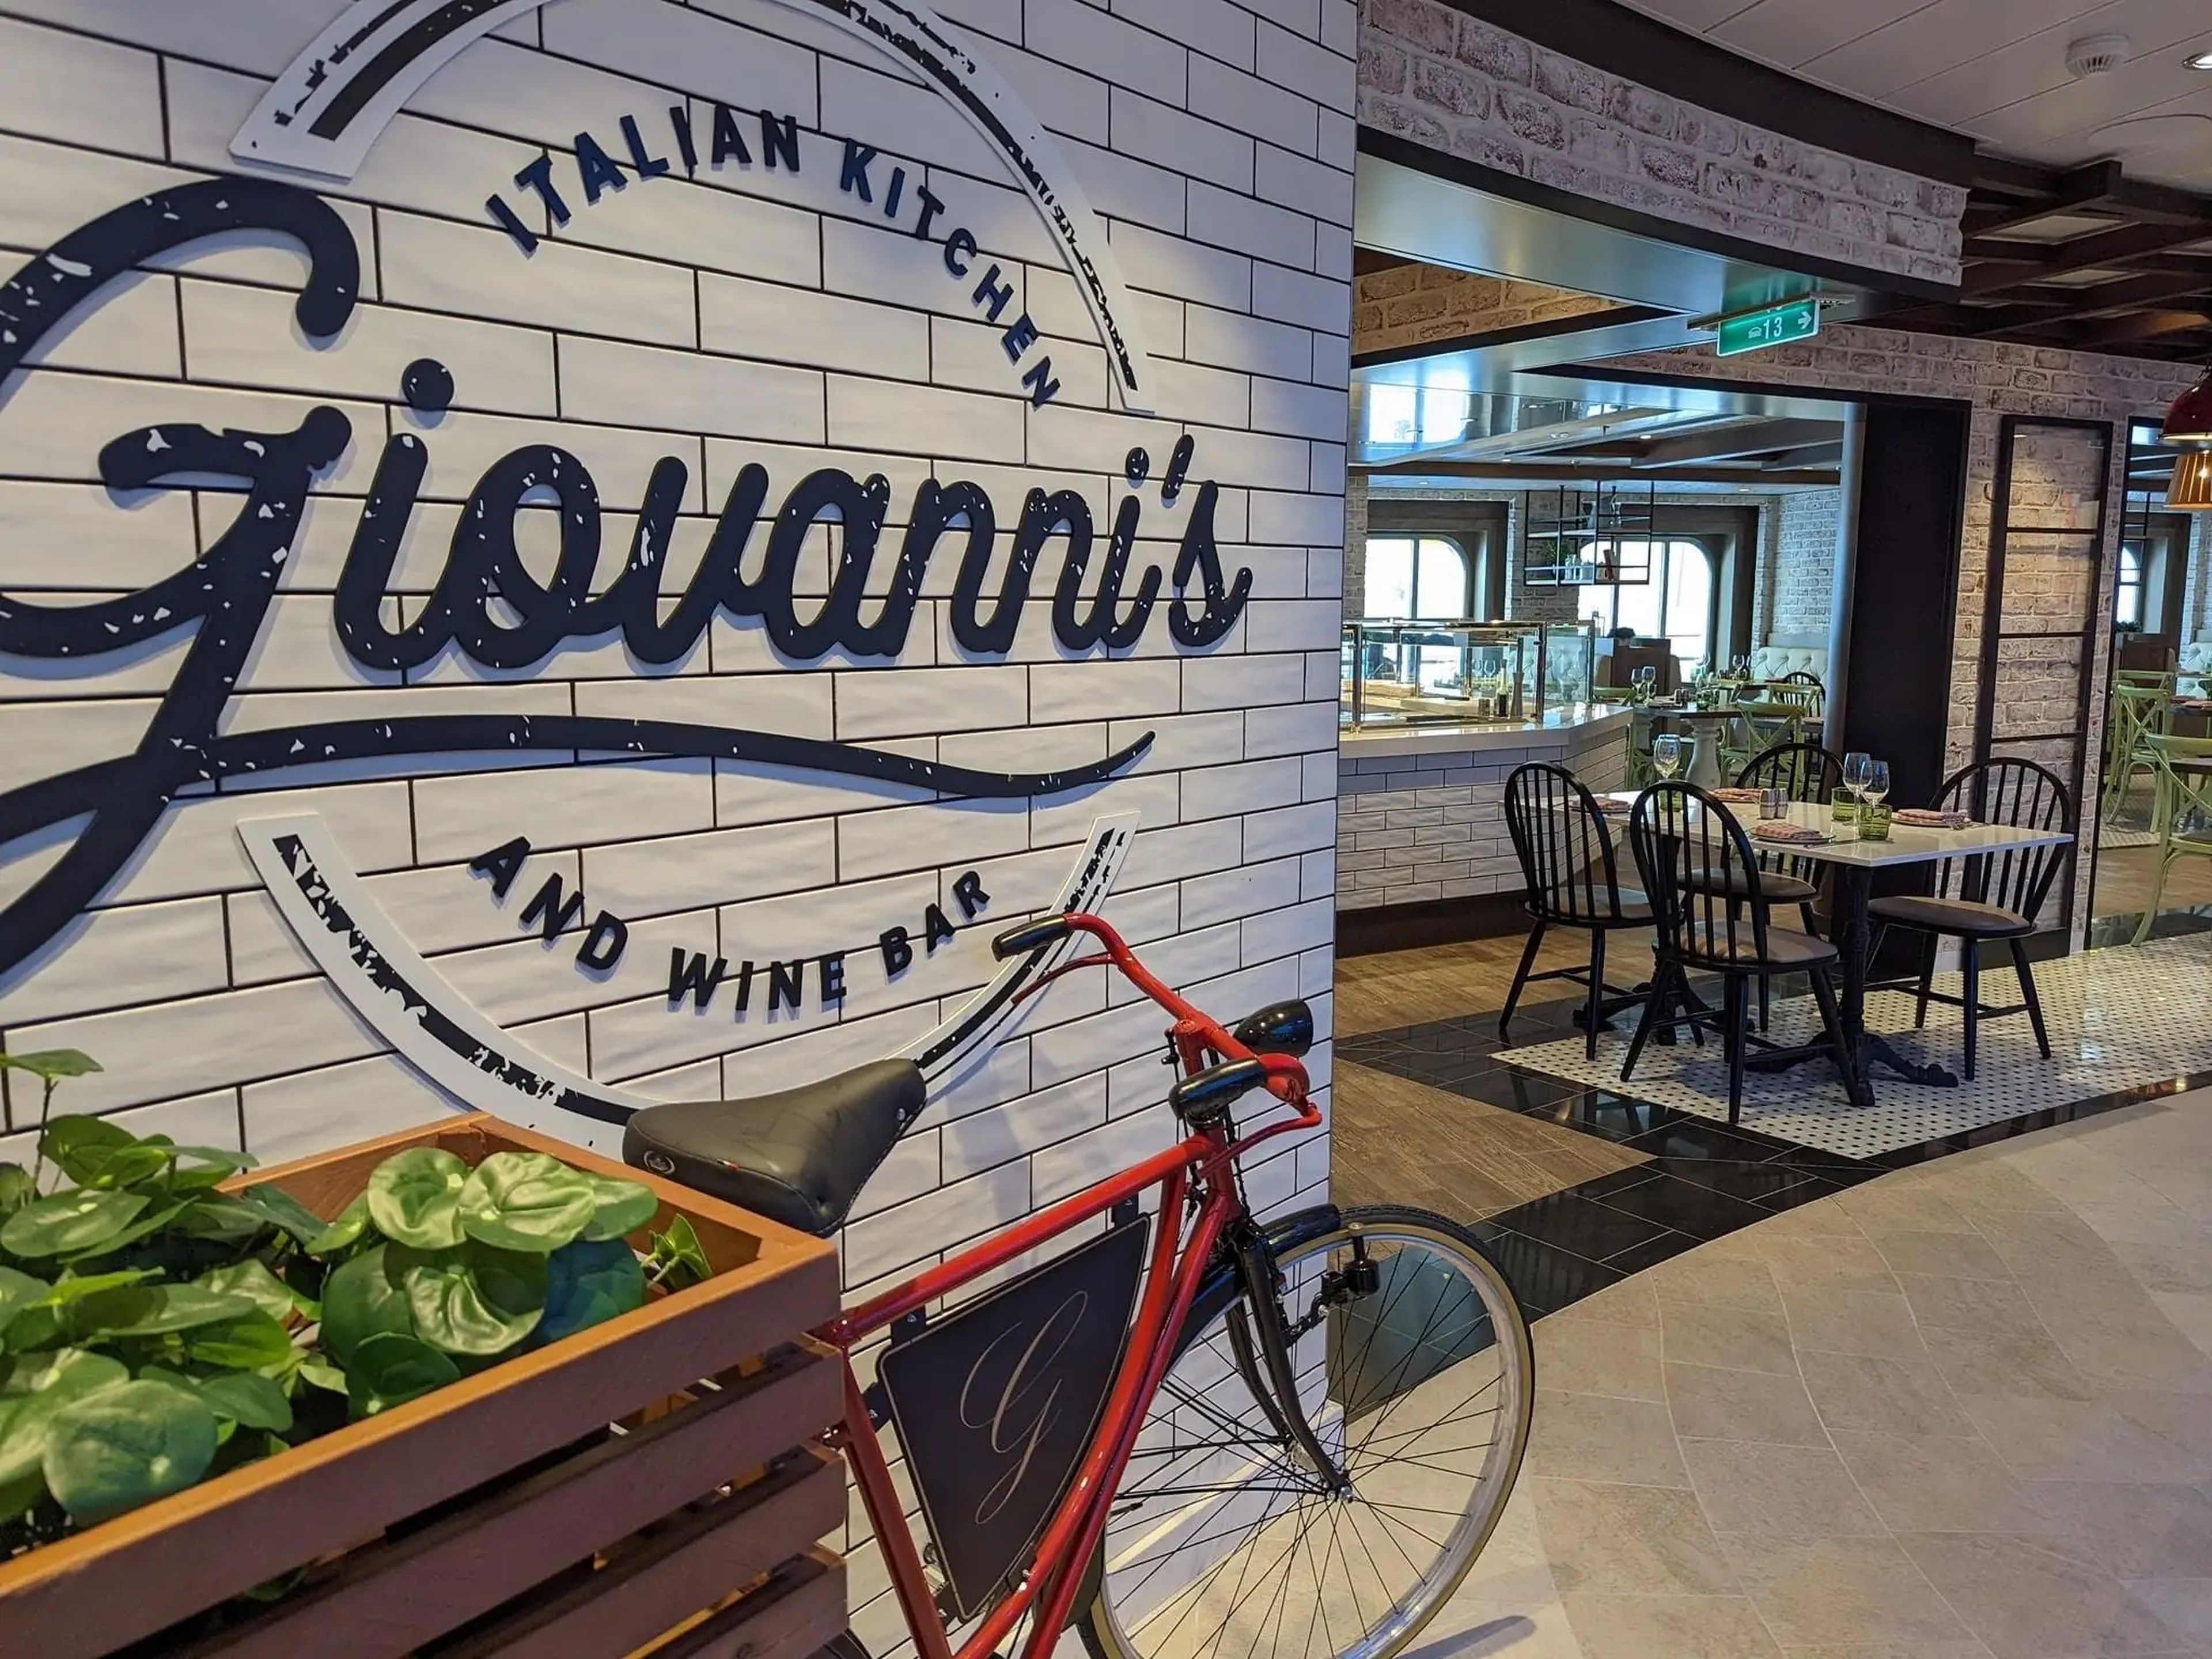 Sign of Italian restaurant, Giovanni's.